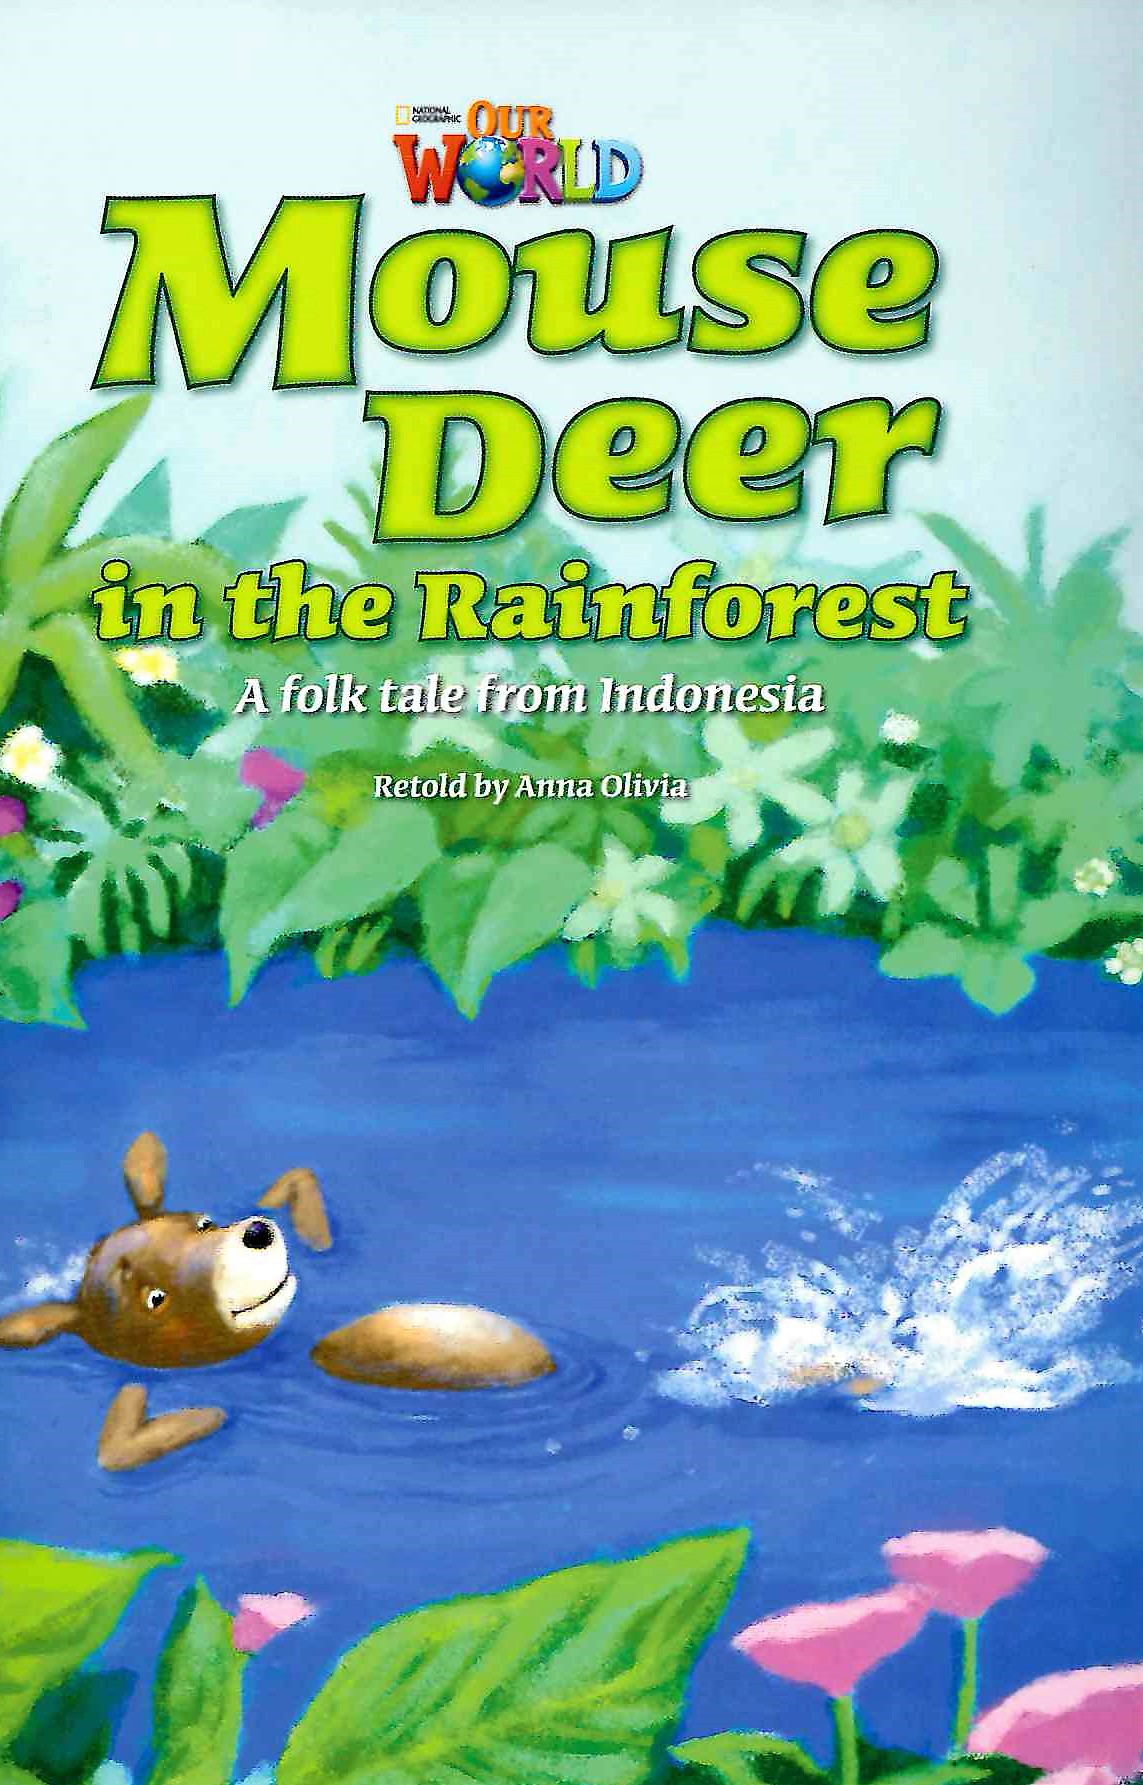 Our World 3 Mouse Deer in the Rainforest / Книга для чтения